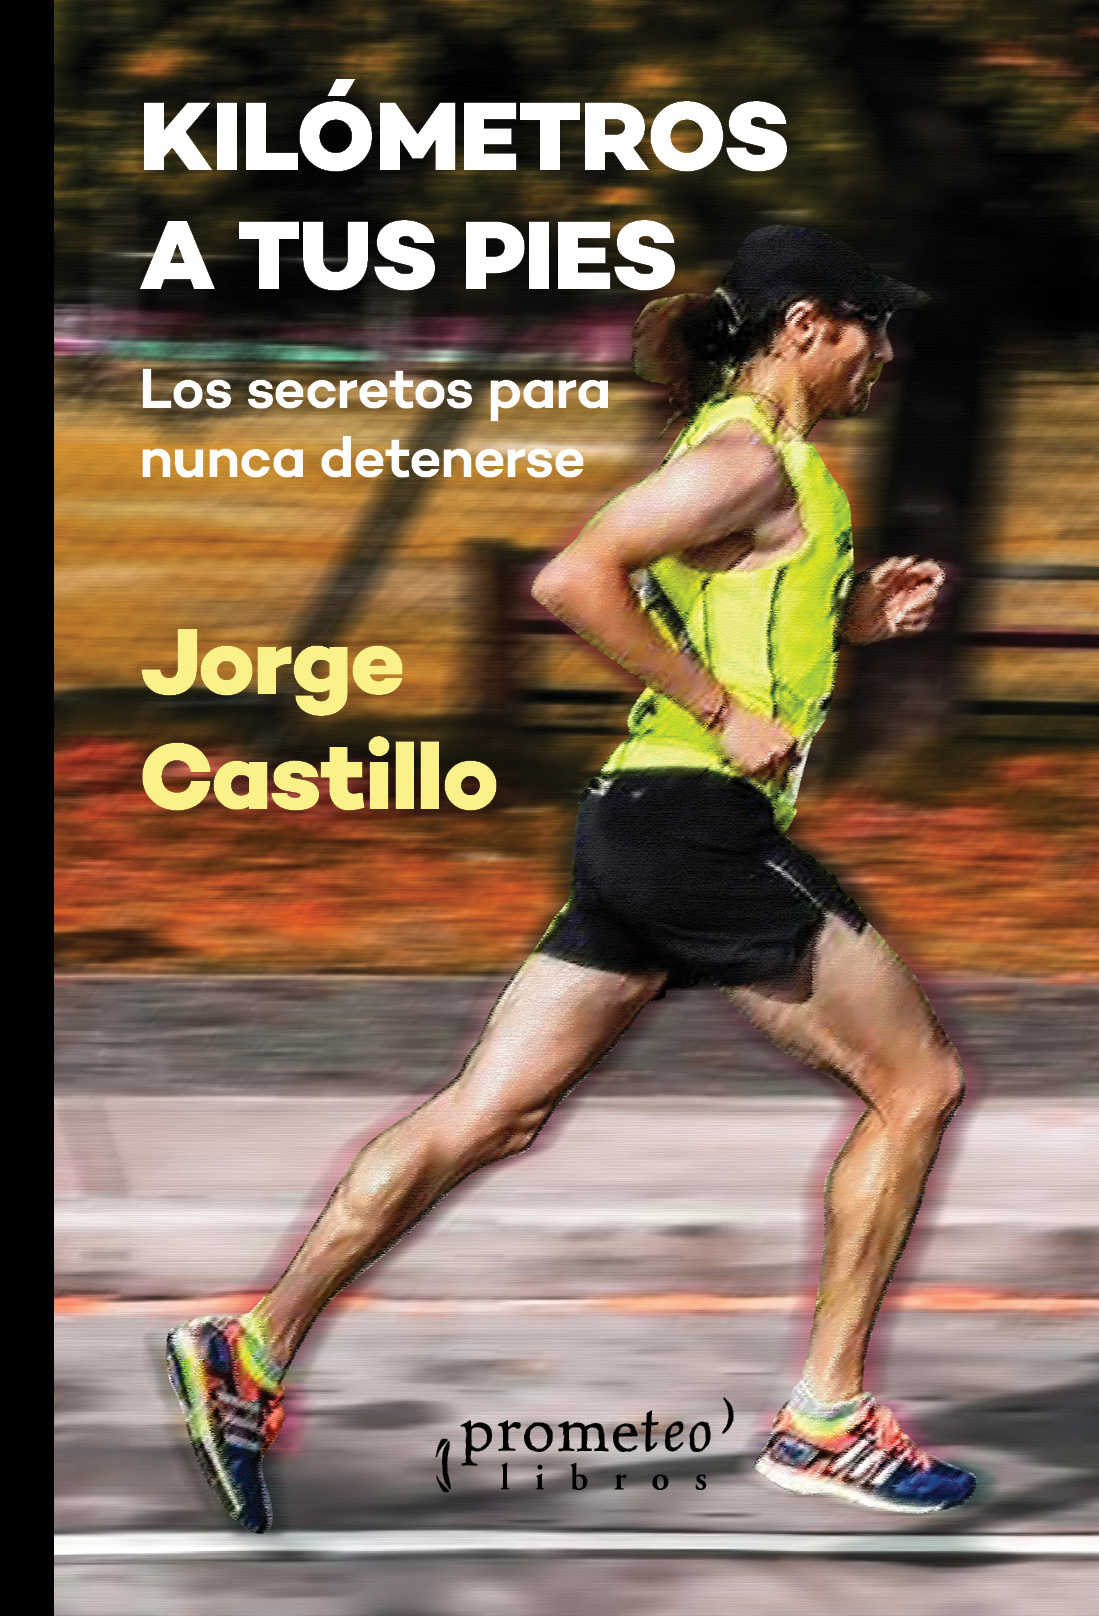 Kilometros a tus pies libro Jorge Castillo running Locos Por Correr 01